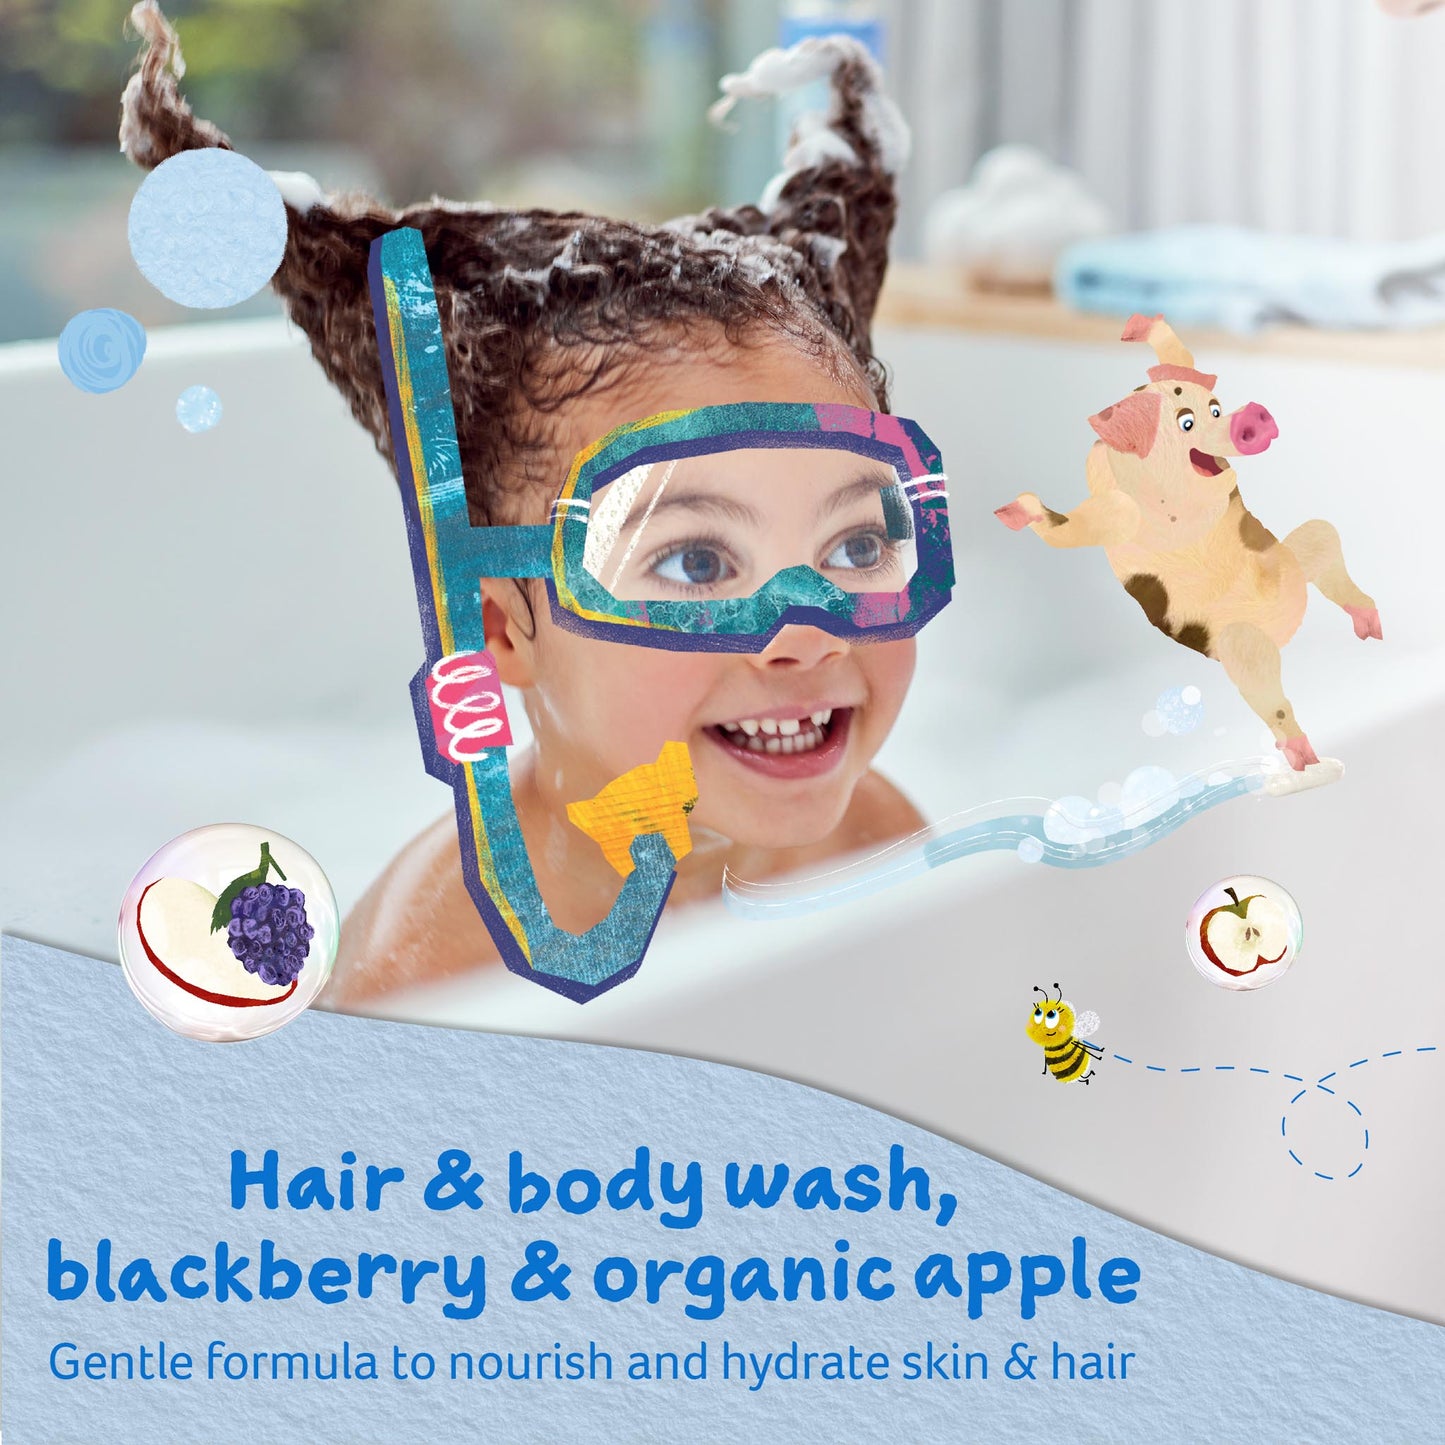 Childs Farm hair & body wash blackberry & organic apple